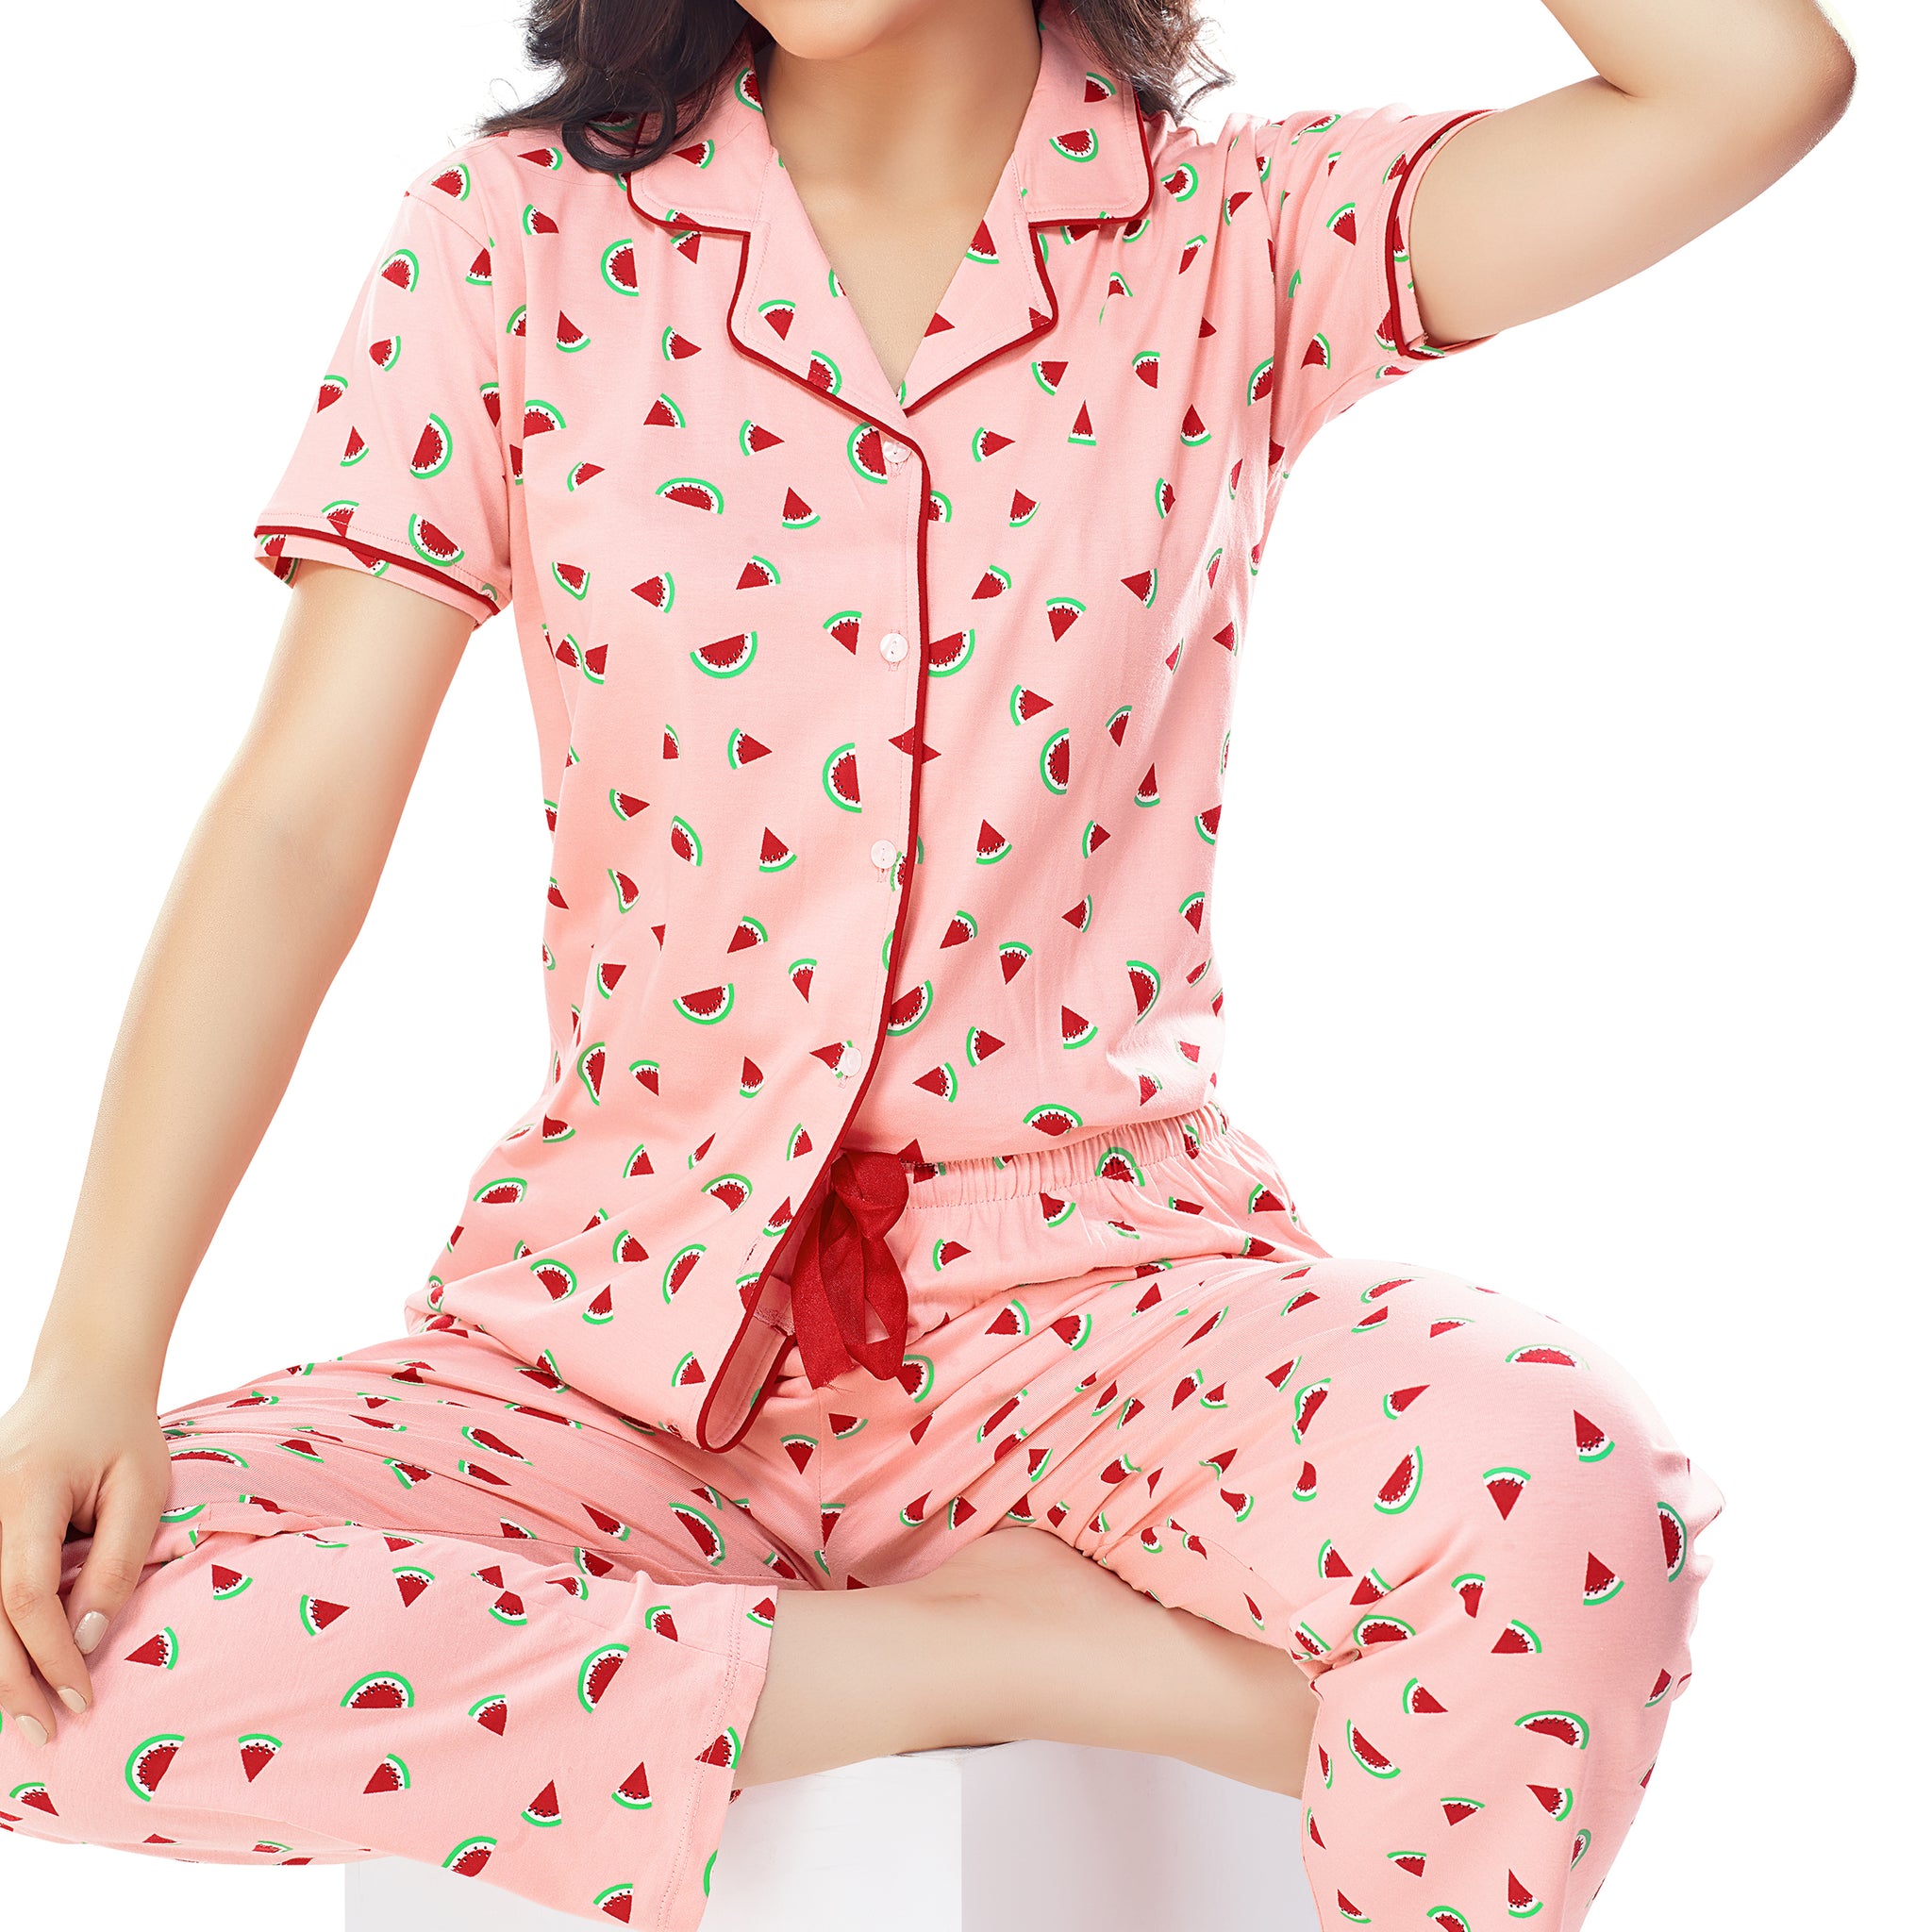 ZEYO Women's Cotton Pink Water Melon Printed Stylish Night suit set